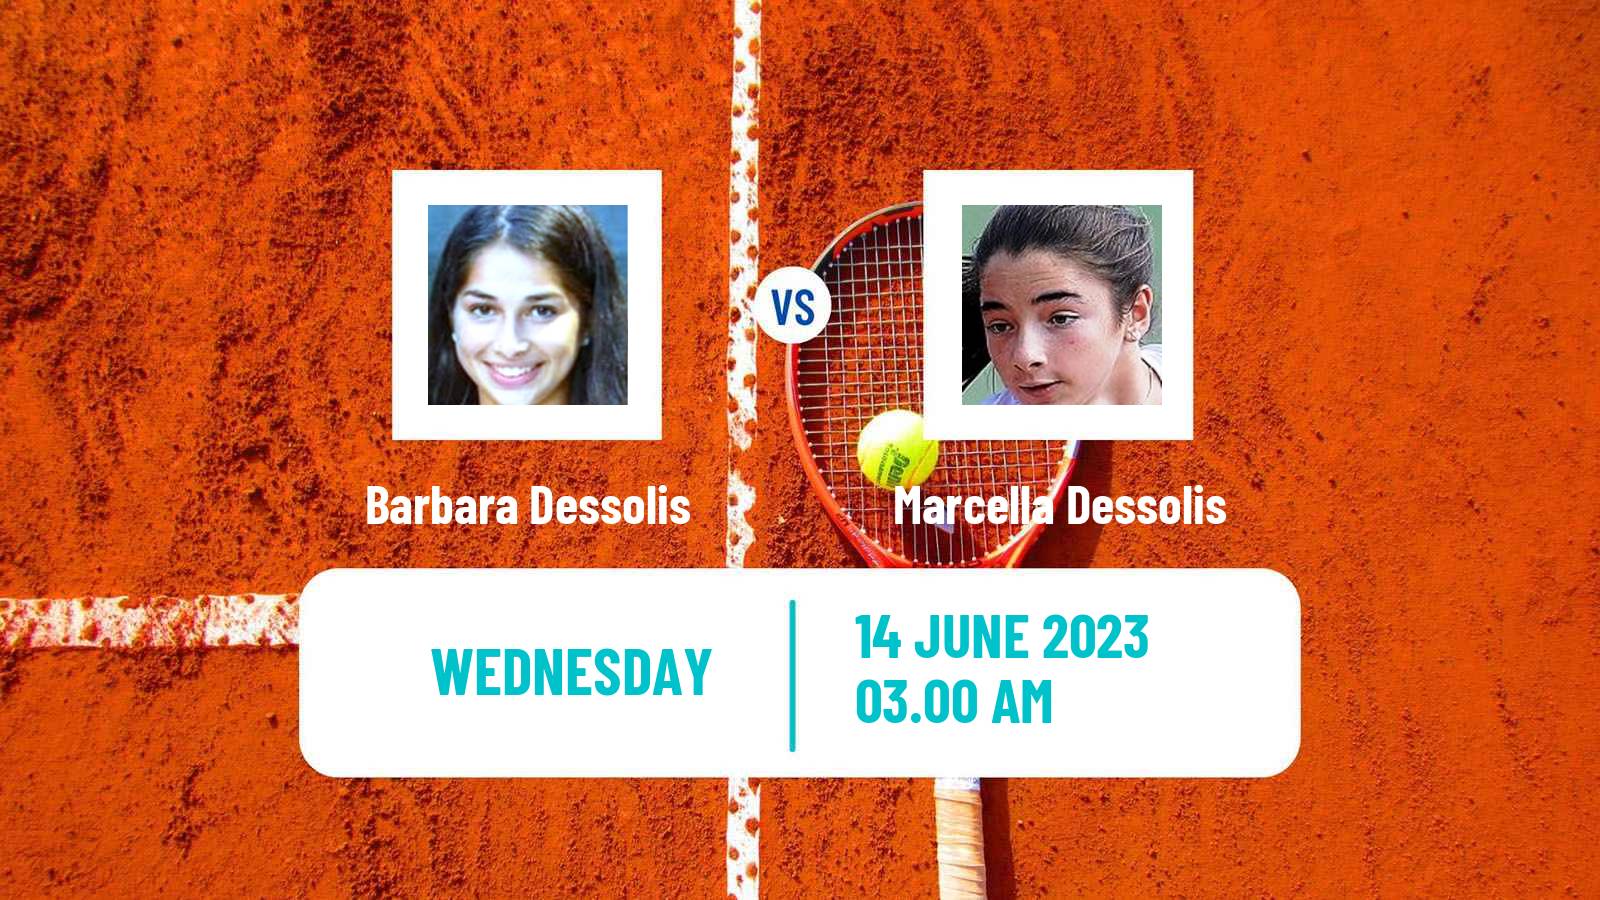 Tennis ITF W15 Kranjska Gora Women Barbara Dessolis - Marcella Dessolis